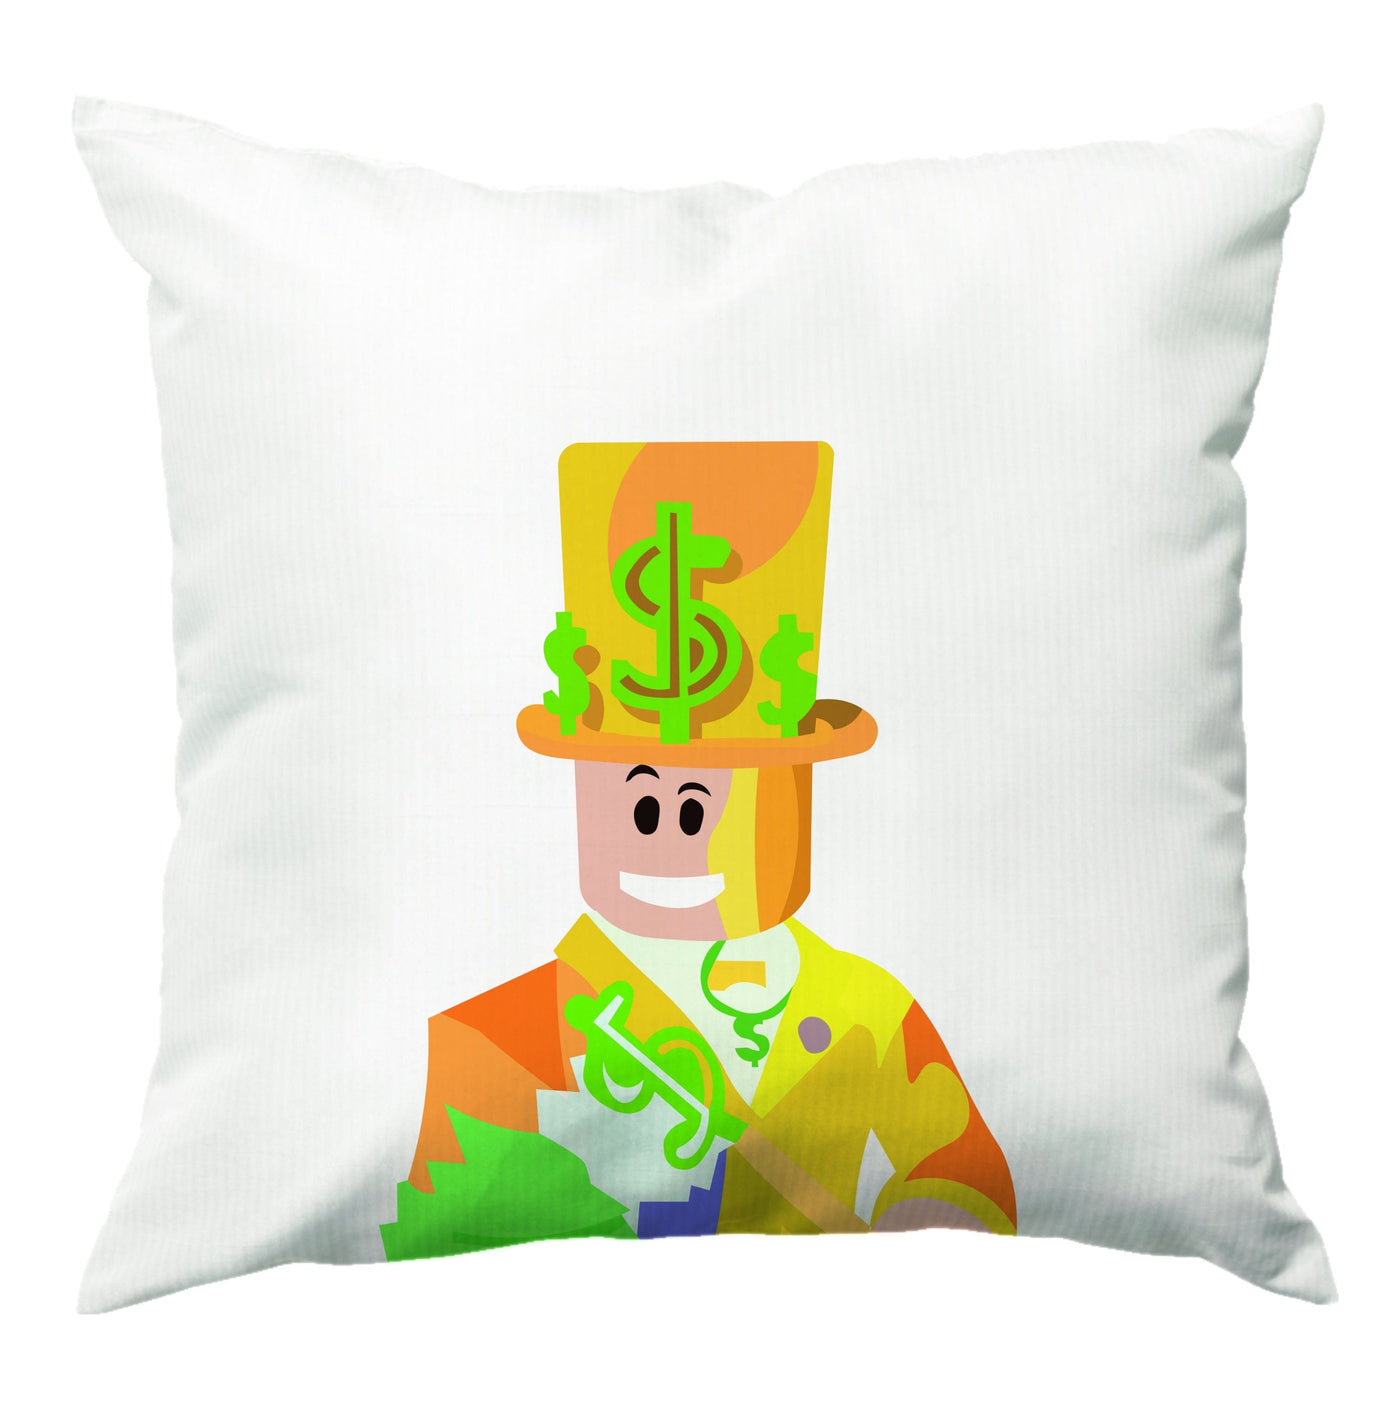 Character Money - Roblox Cushion